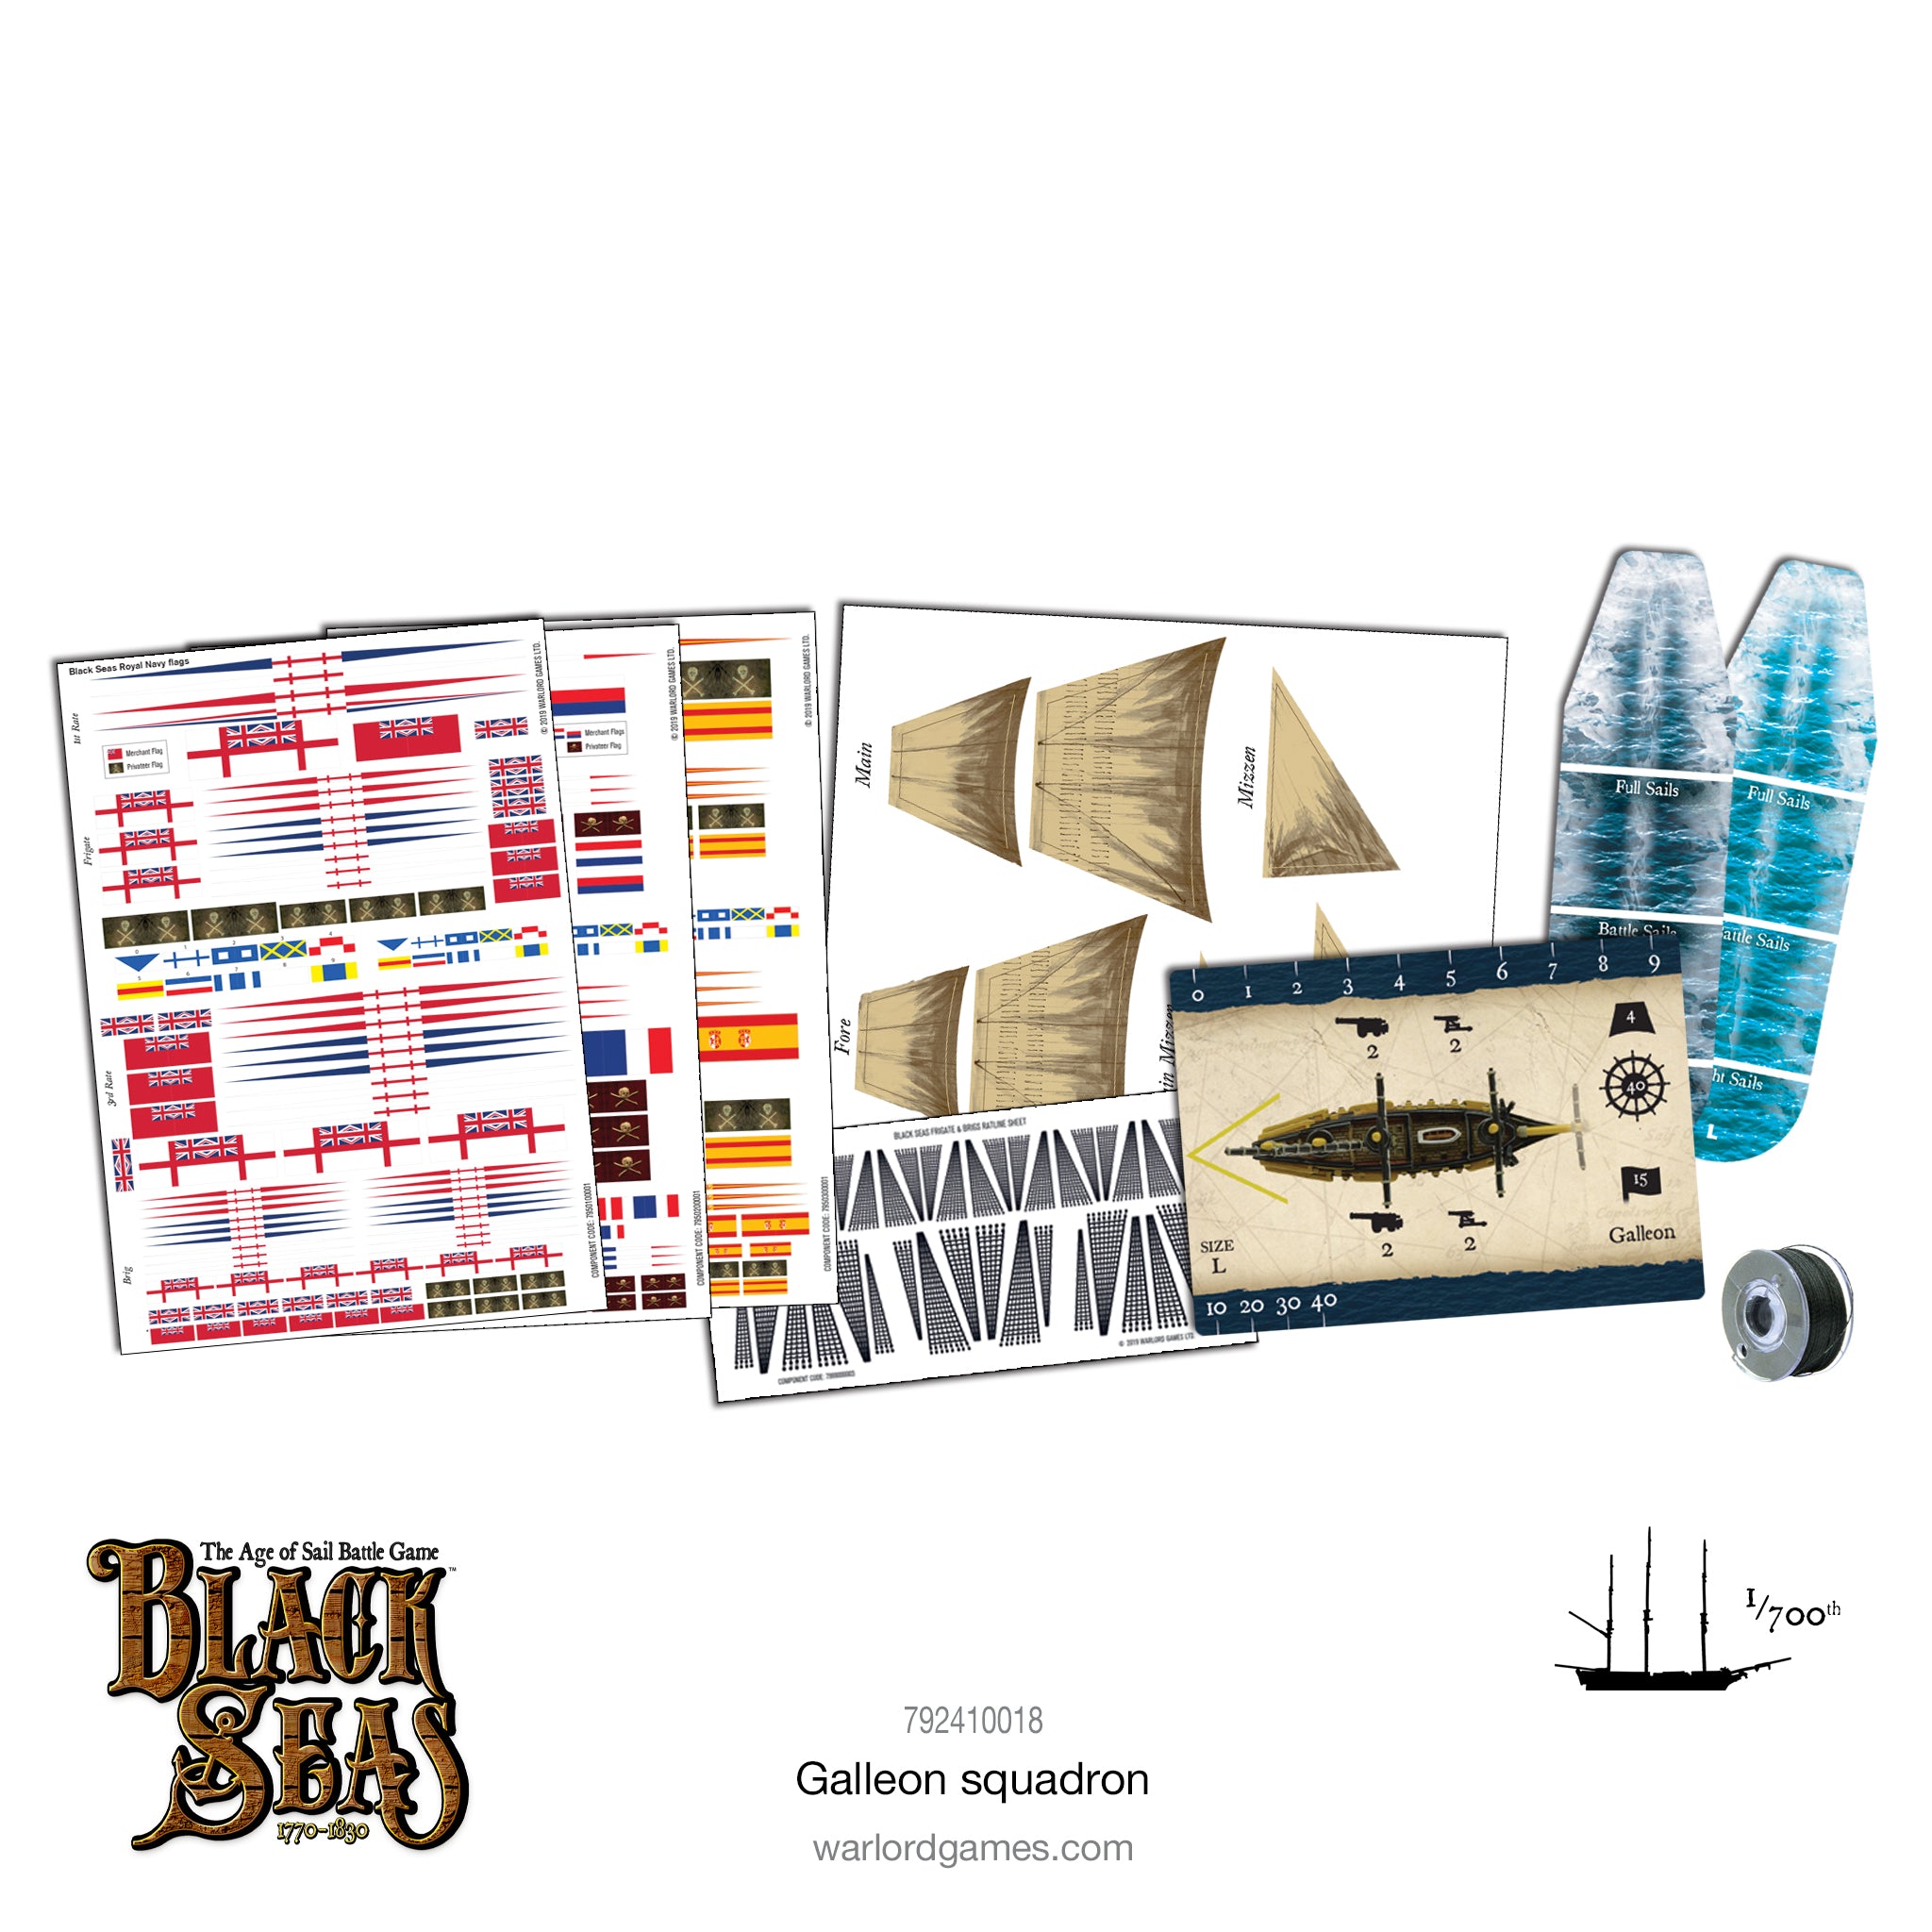 Black Seas: Galleon squadron